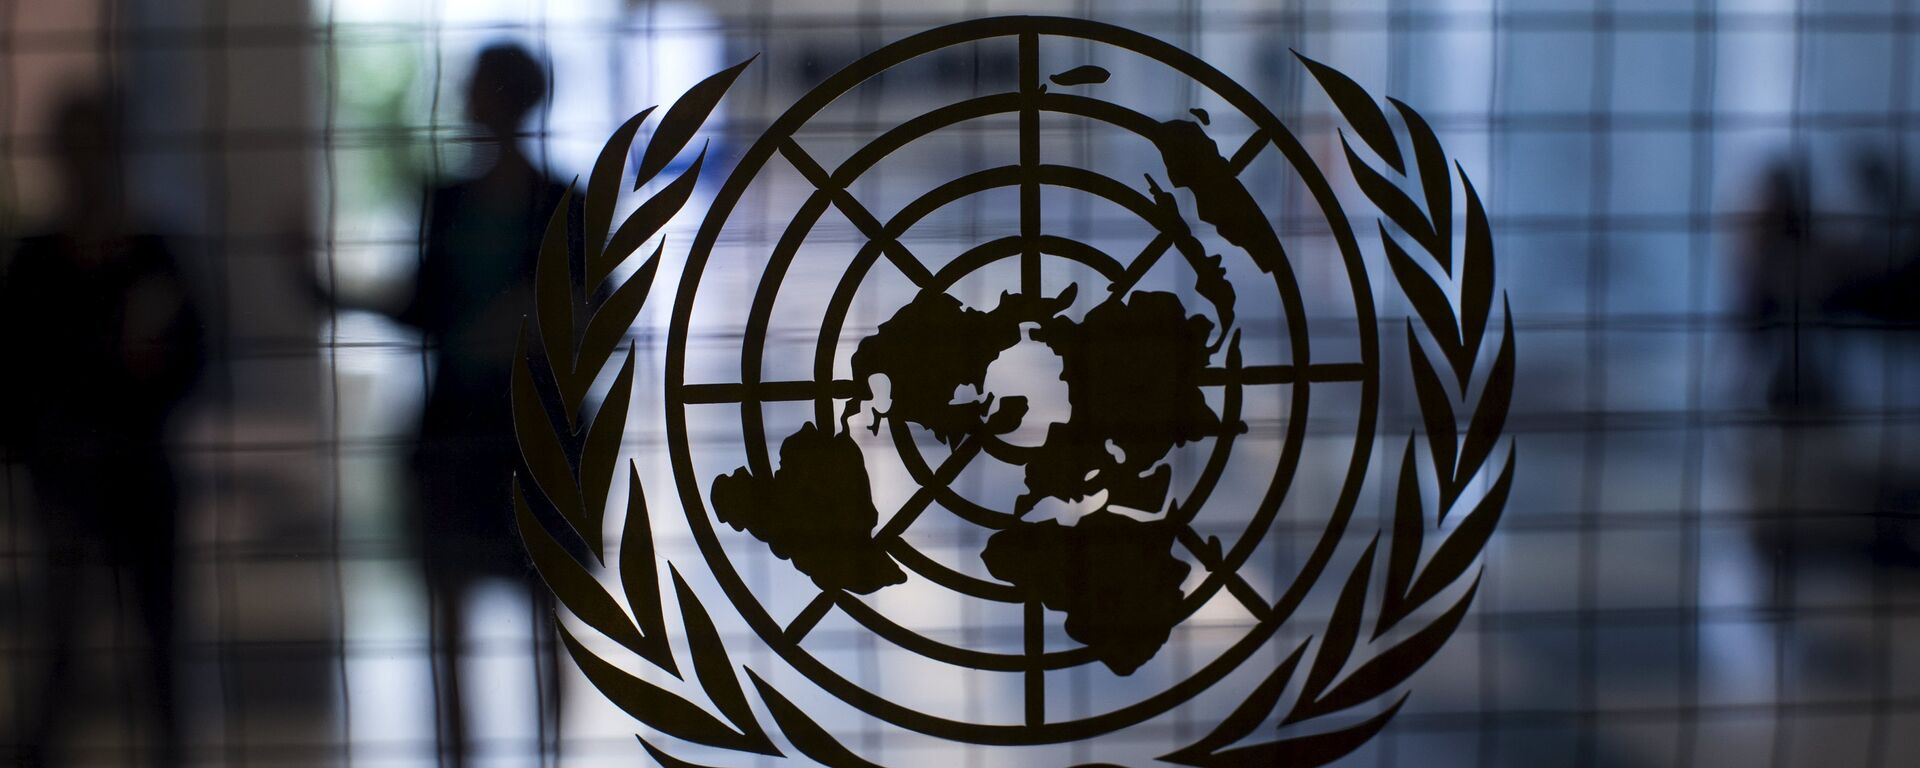 Logo de la ONU - Sputnik Mundo, 1920, 27.11.2021